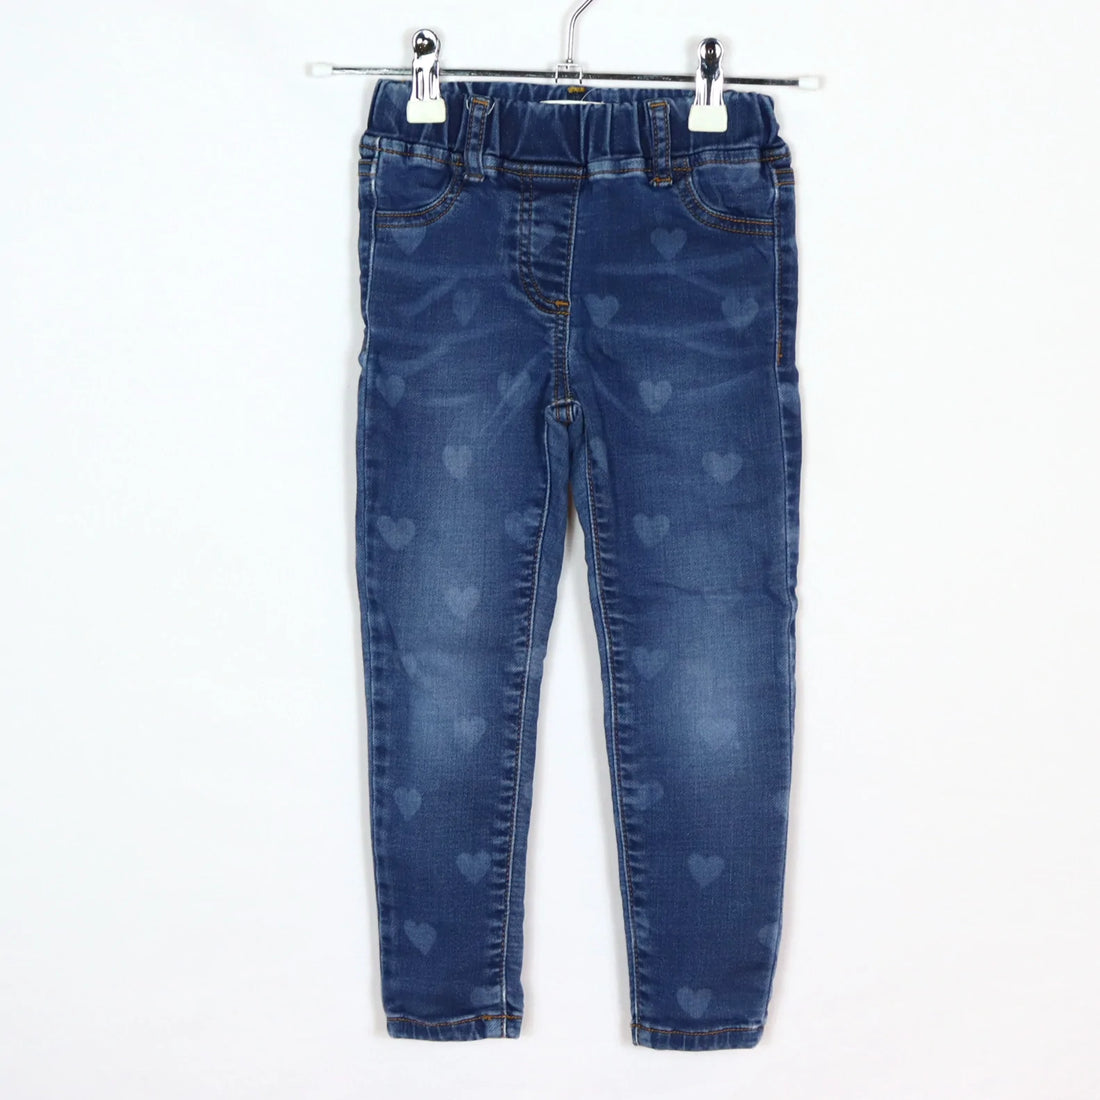 Jeans - Mini Boden - 104 - blau - Herz - Girl